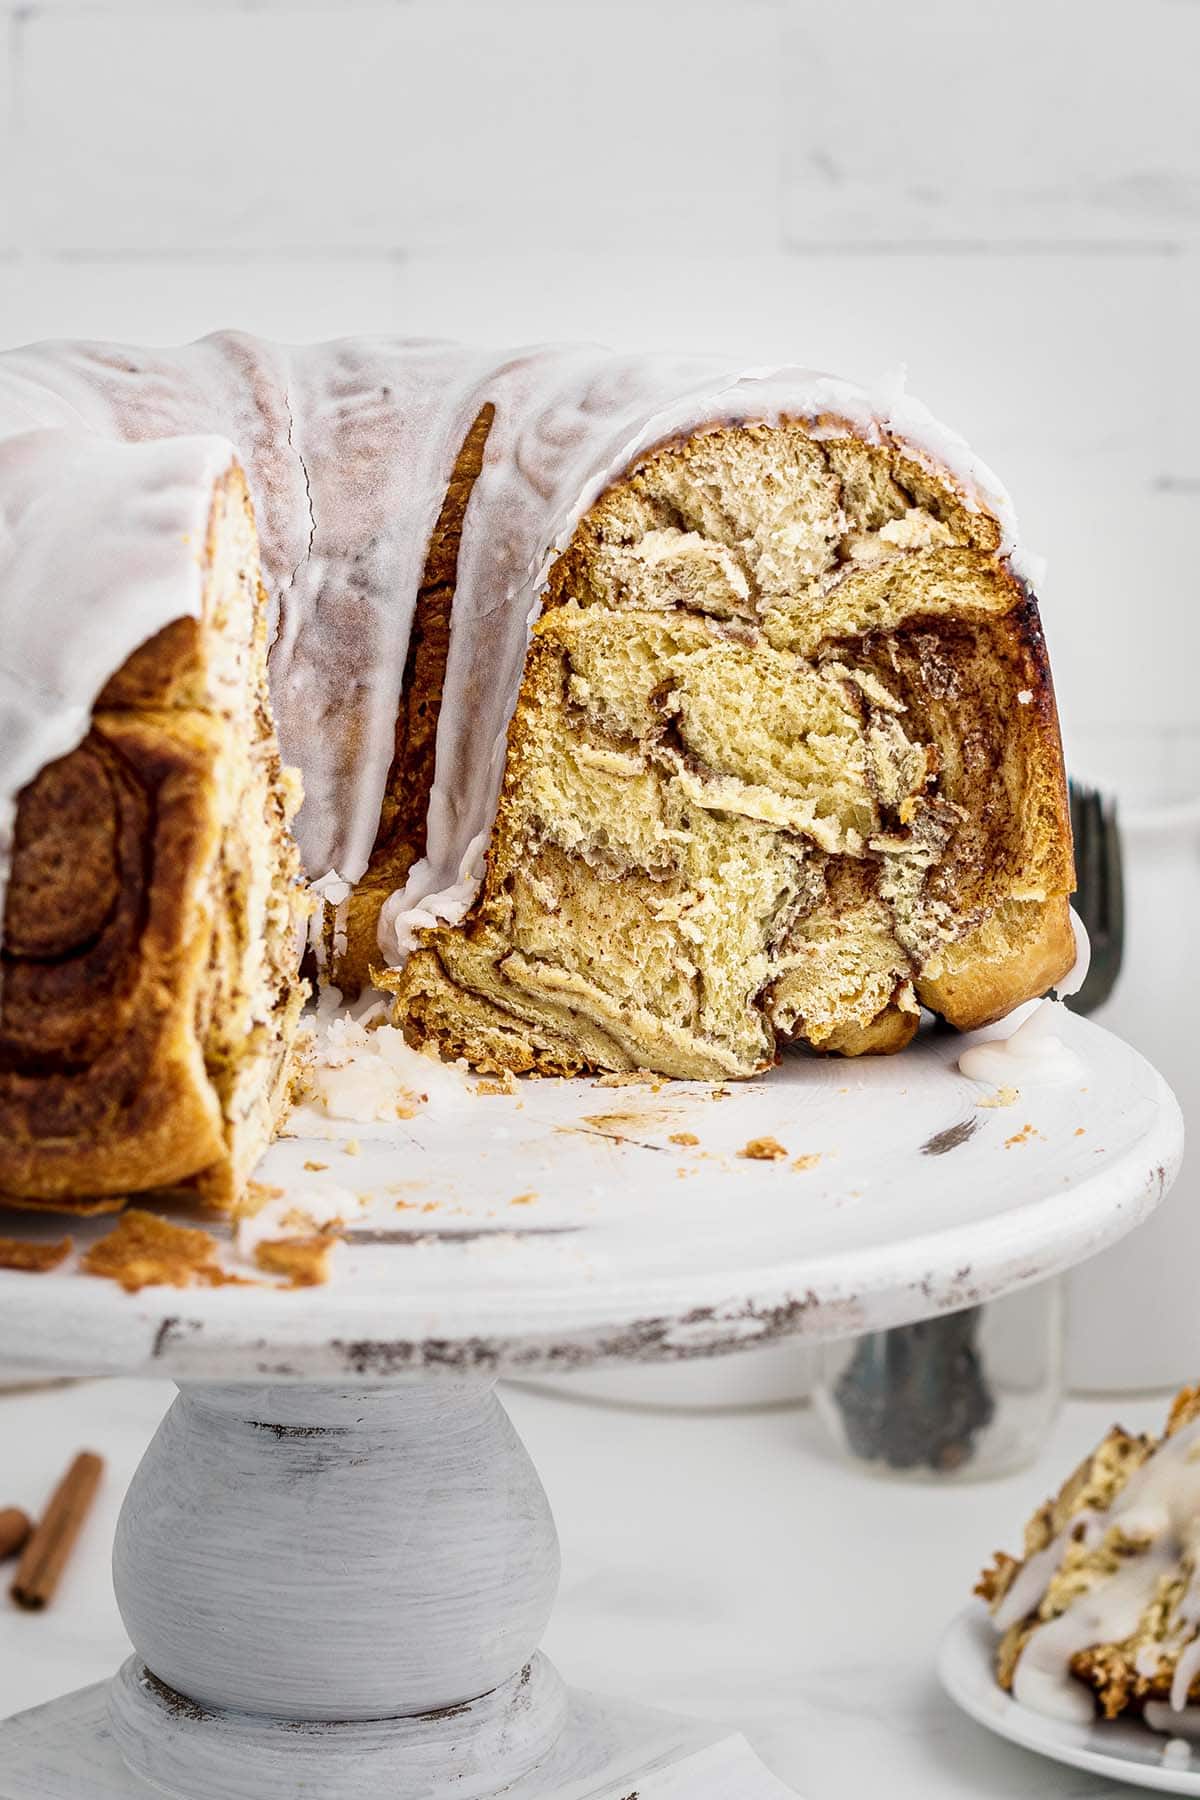 showing the inside of Cinnamon Roll Bundt Cake